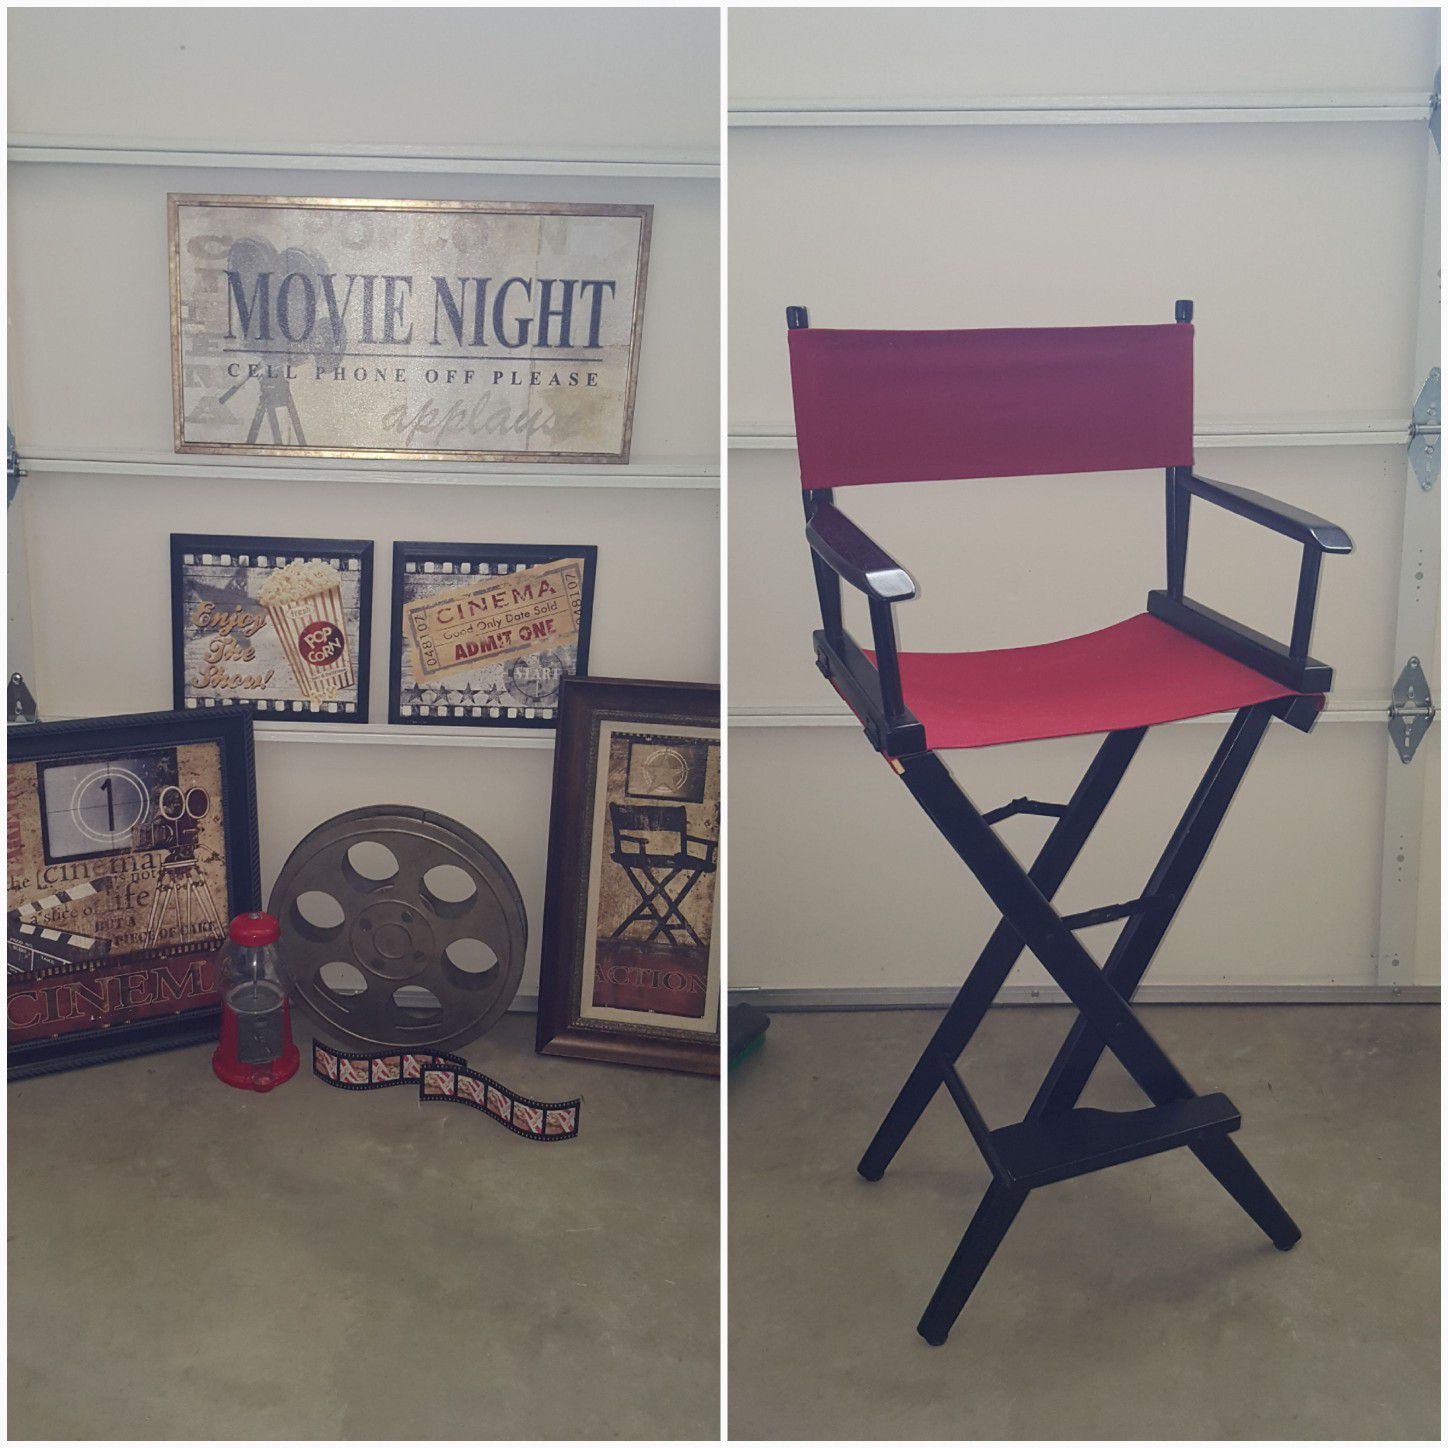 Director's Chair and Cinema Theme Decor